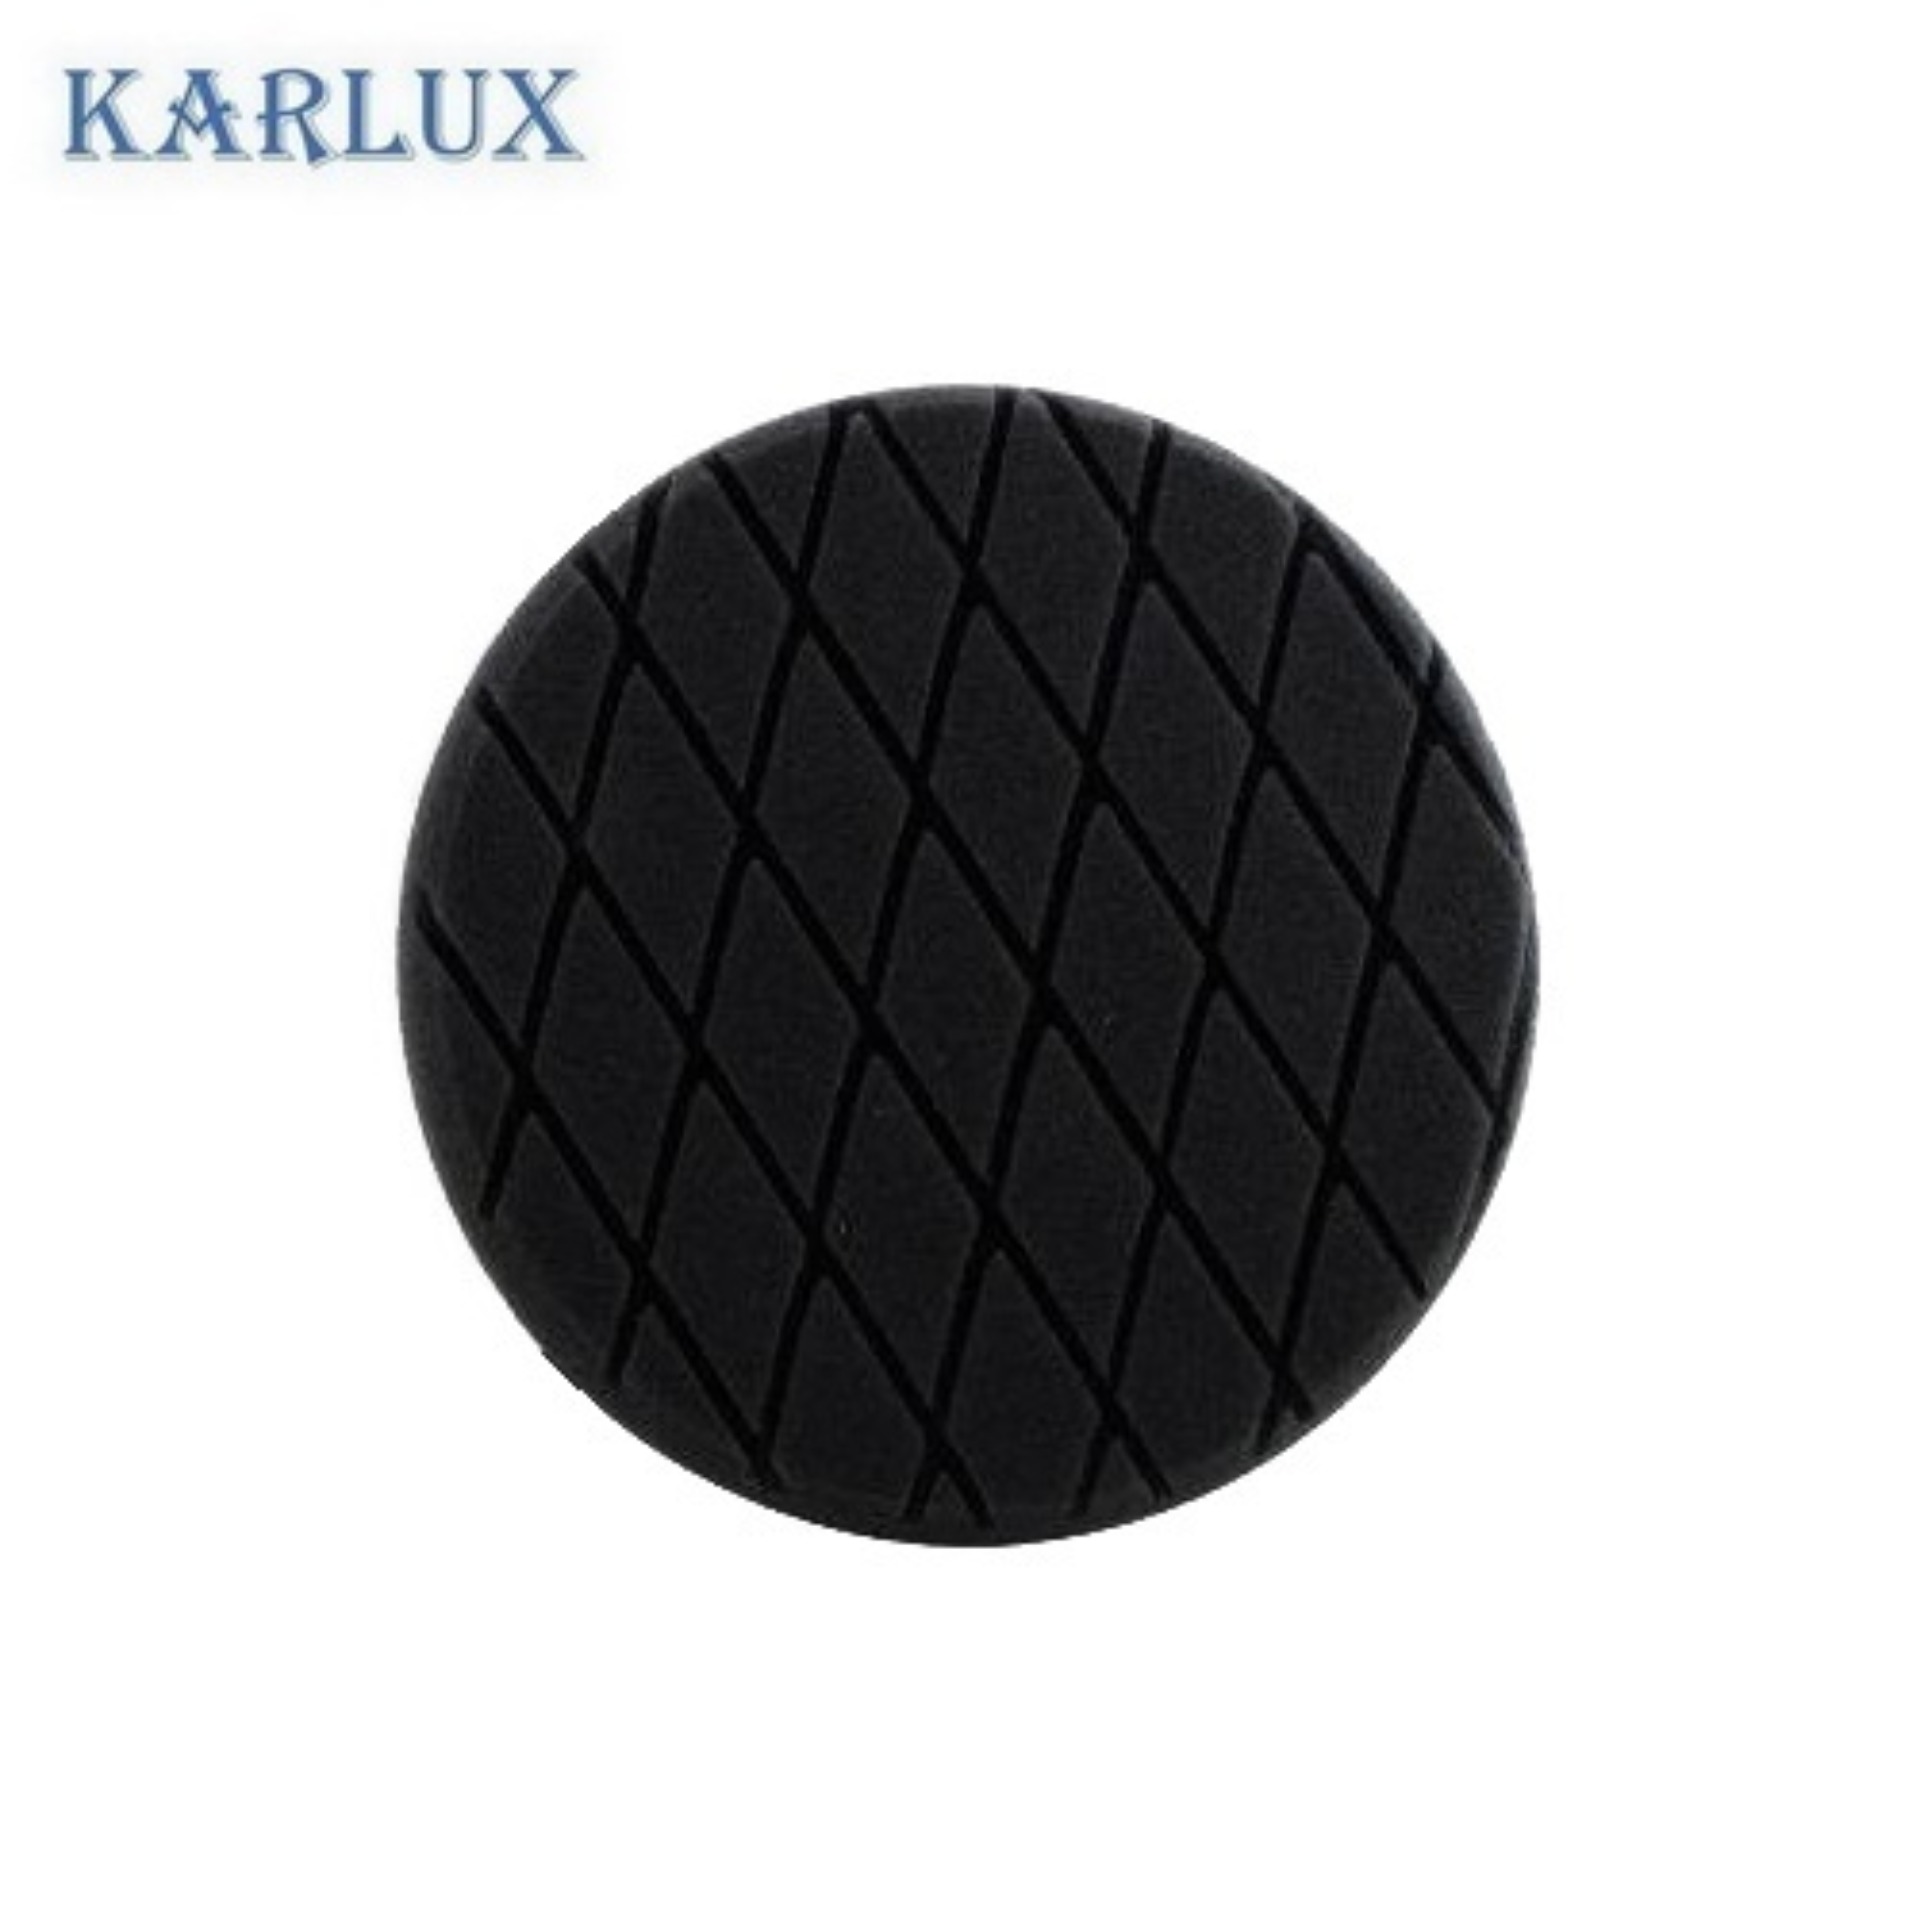 Karlux ฟองน้ำขัดสีรถ 6นิ้ว สีดำ Black Polish Diamond Cross Foam 6inch (สำหรับแป้นจับ 5นิ้ว เพื่อเว้นขอบ)